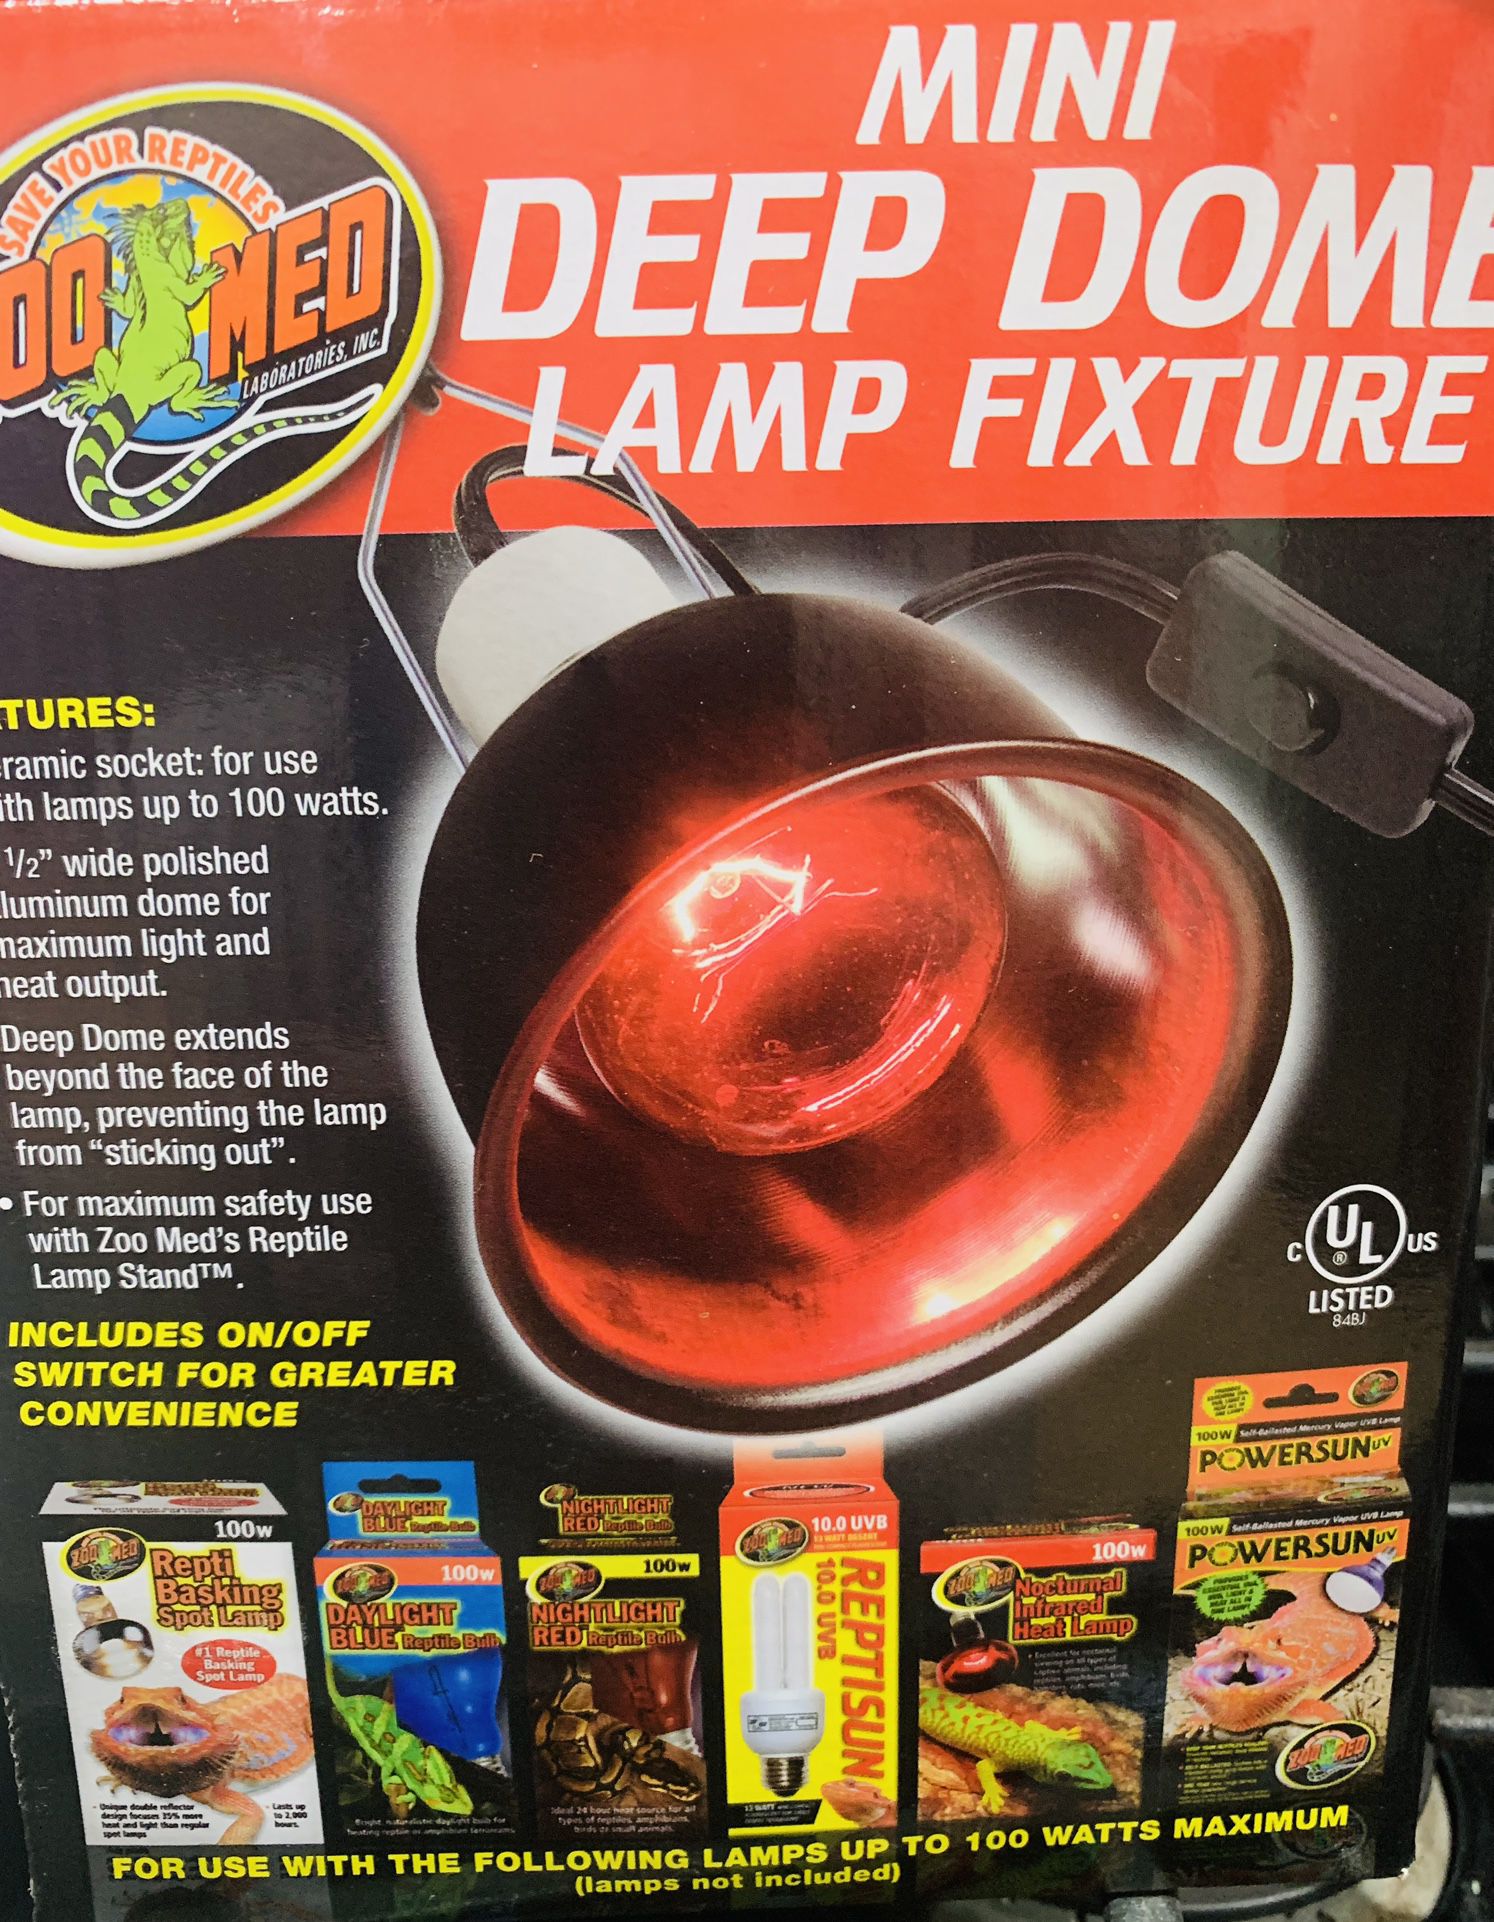 NEW Deep Dome Lamp! 